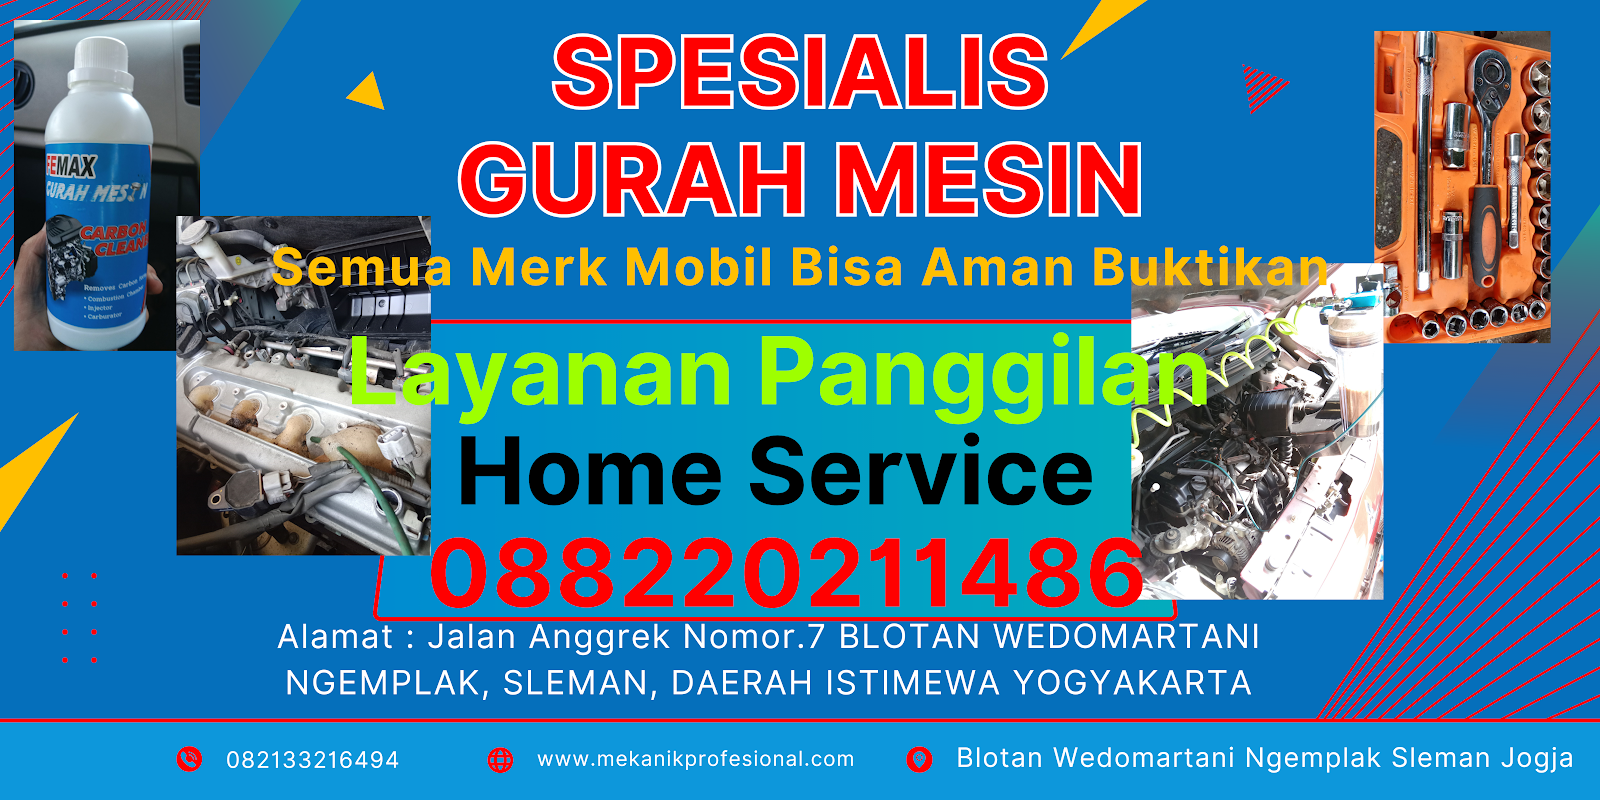 Gurah Mesin Profesional Spesialis Home Service 